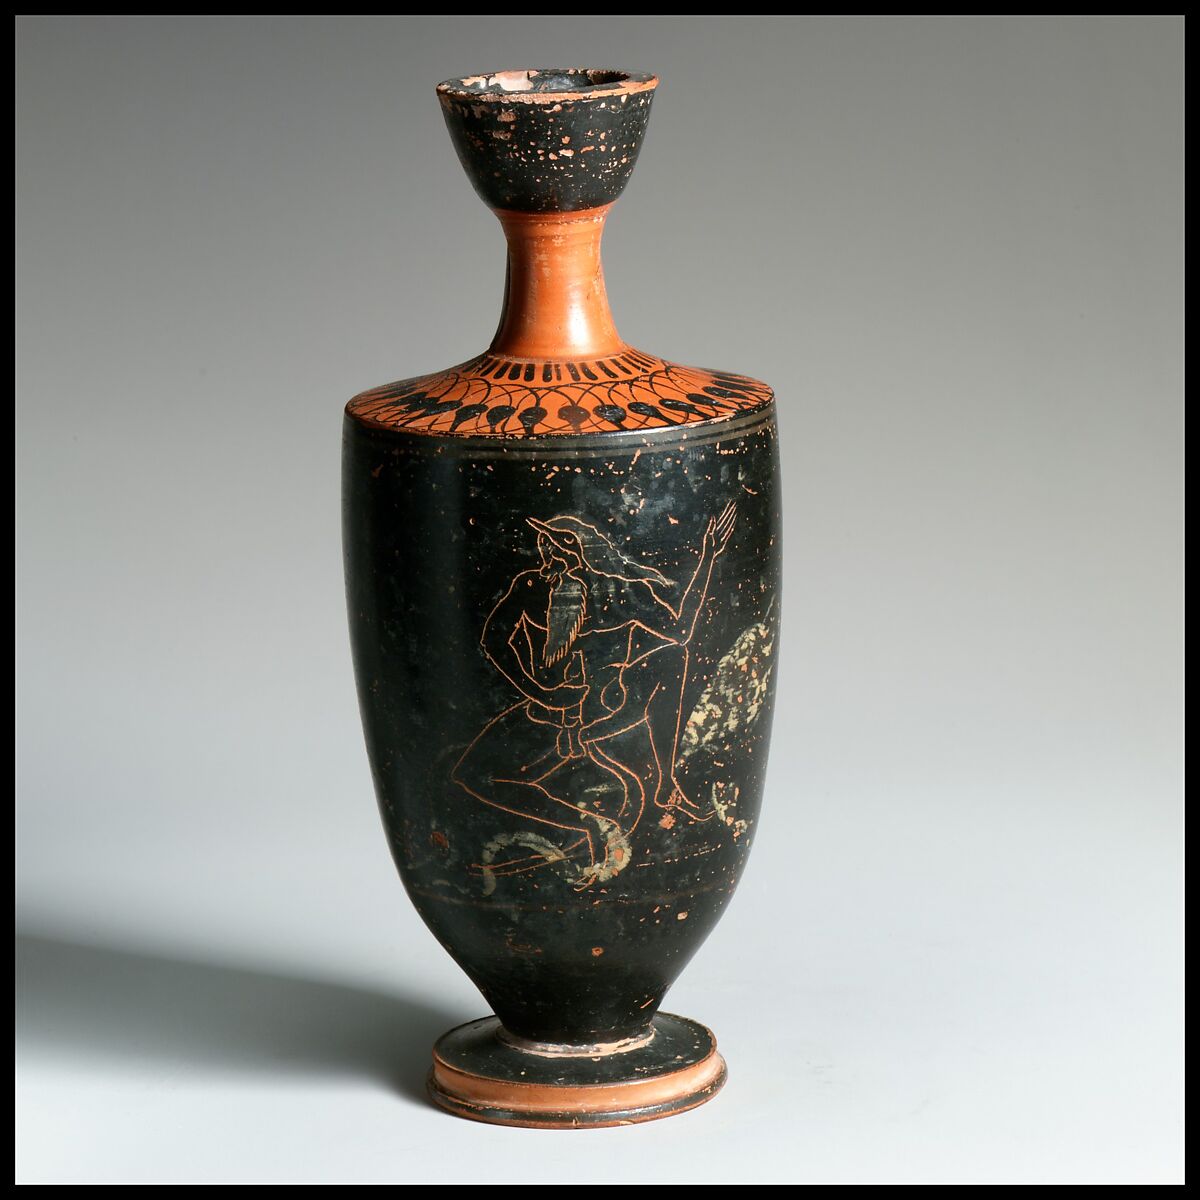 Terracottas lekythos (oil flask), Attributed to the Sappho Painter, Terracotta, Greek, Attic 